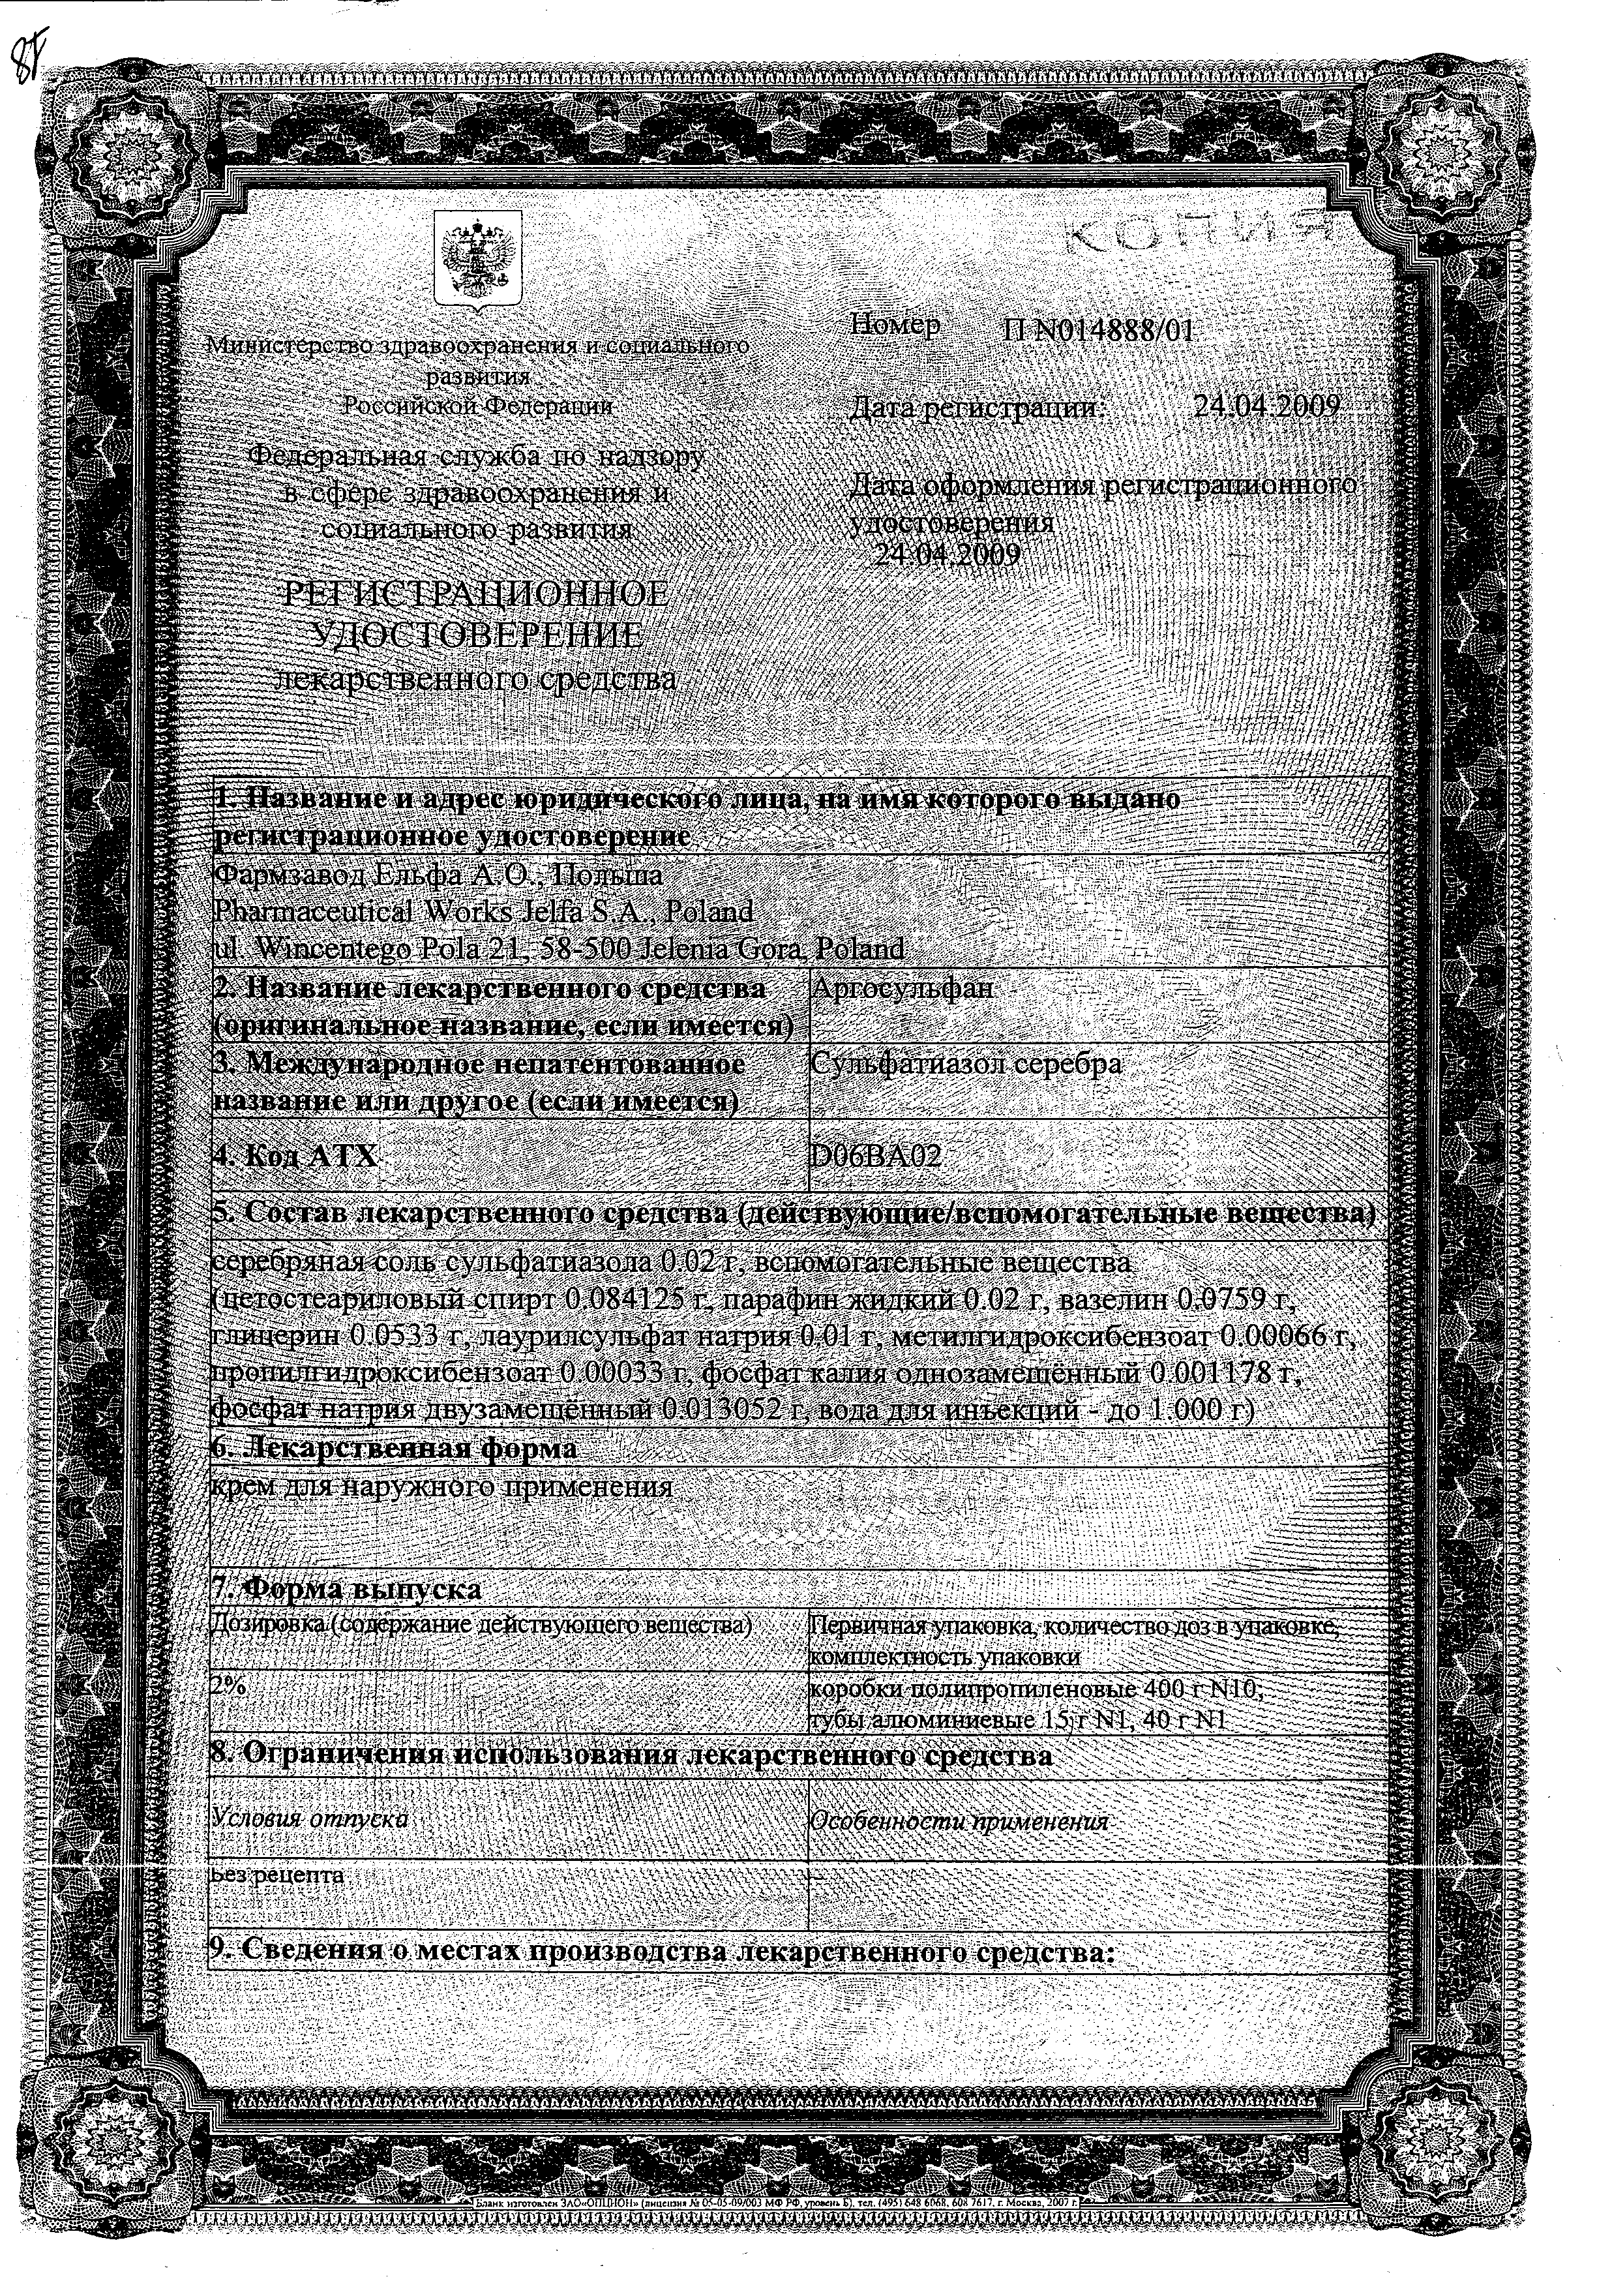 Аргосульфан сертификат